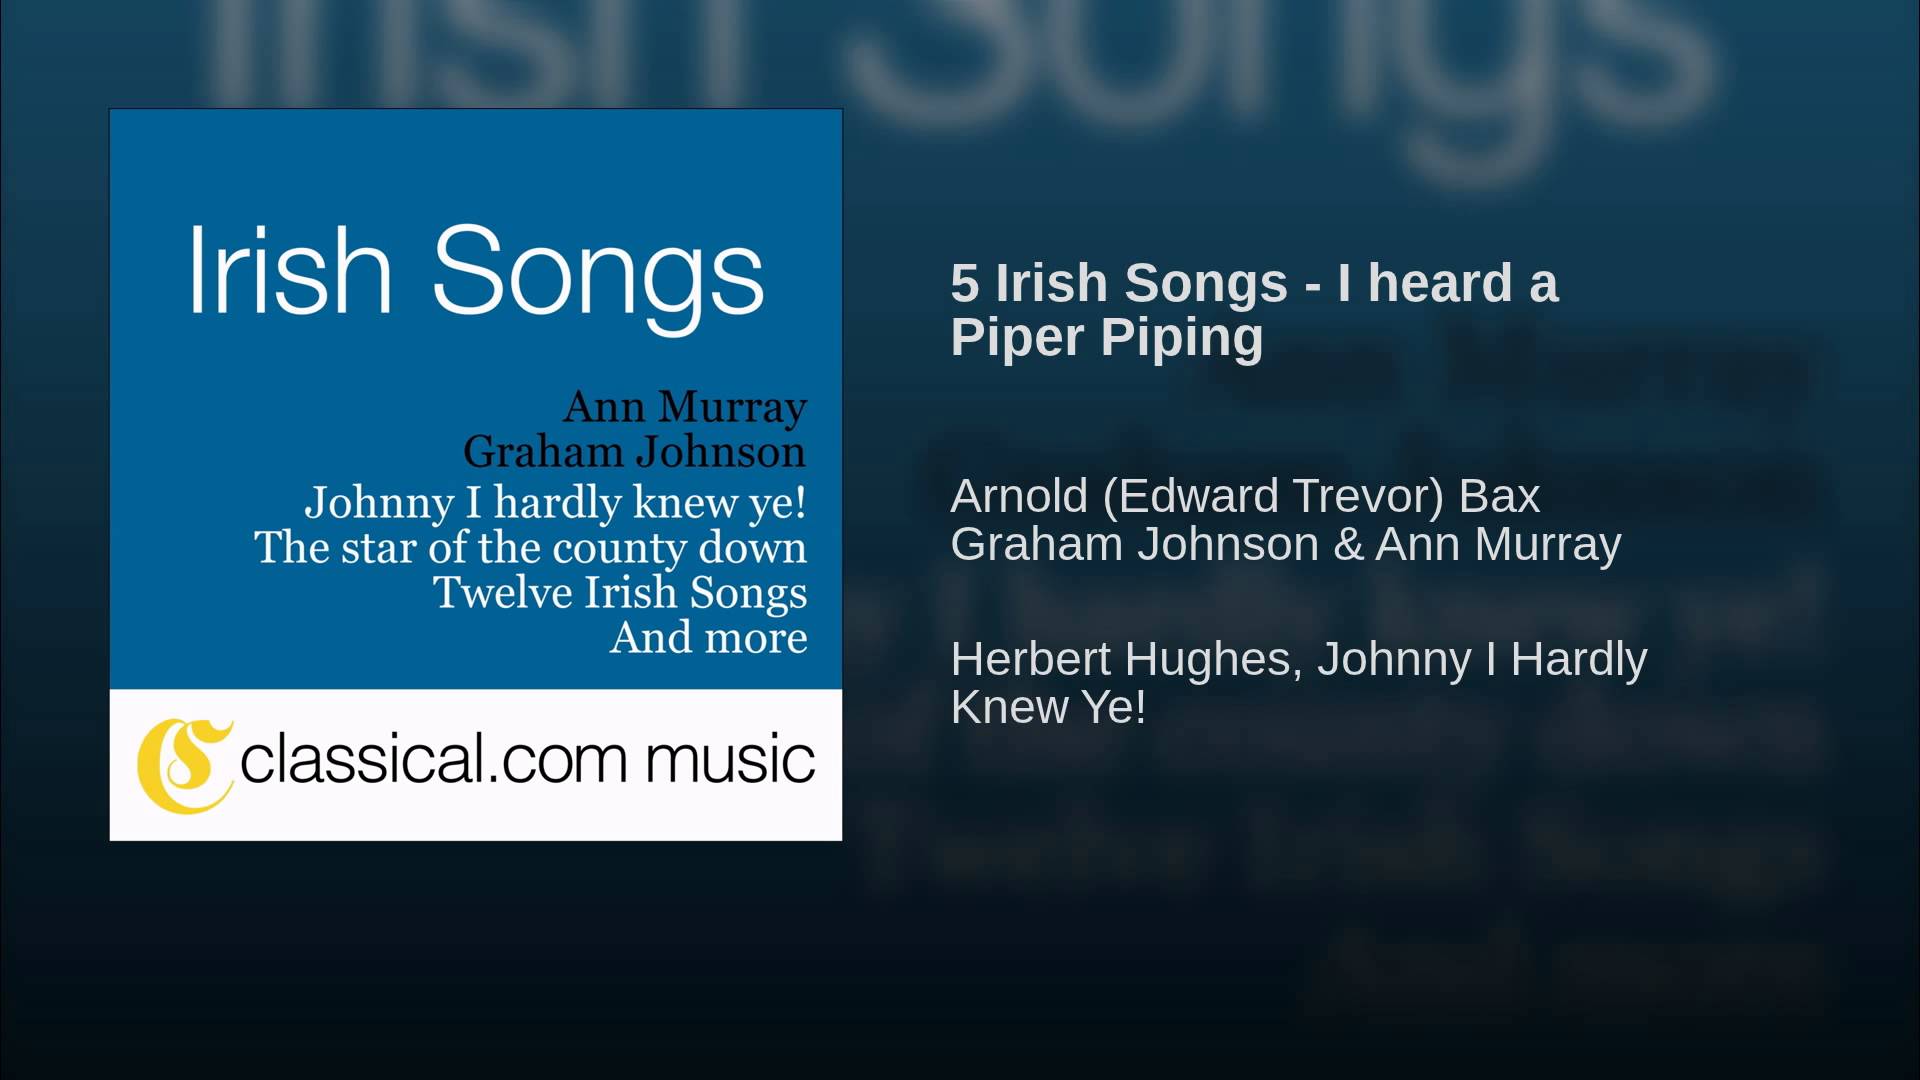 Arnold Bax: I heard a Piper Piping